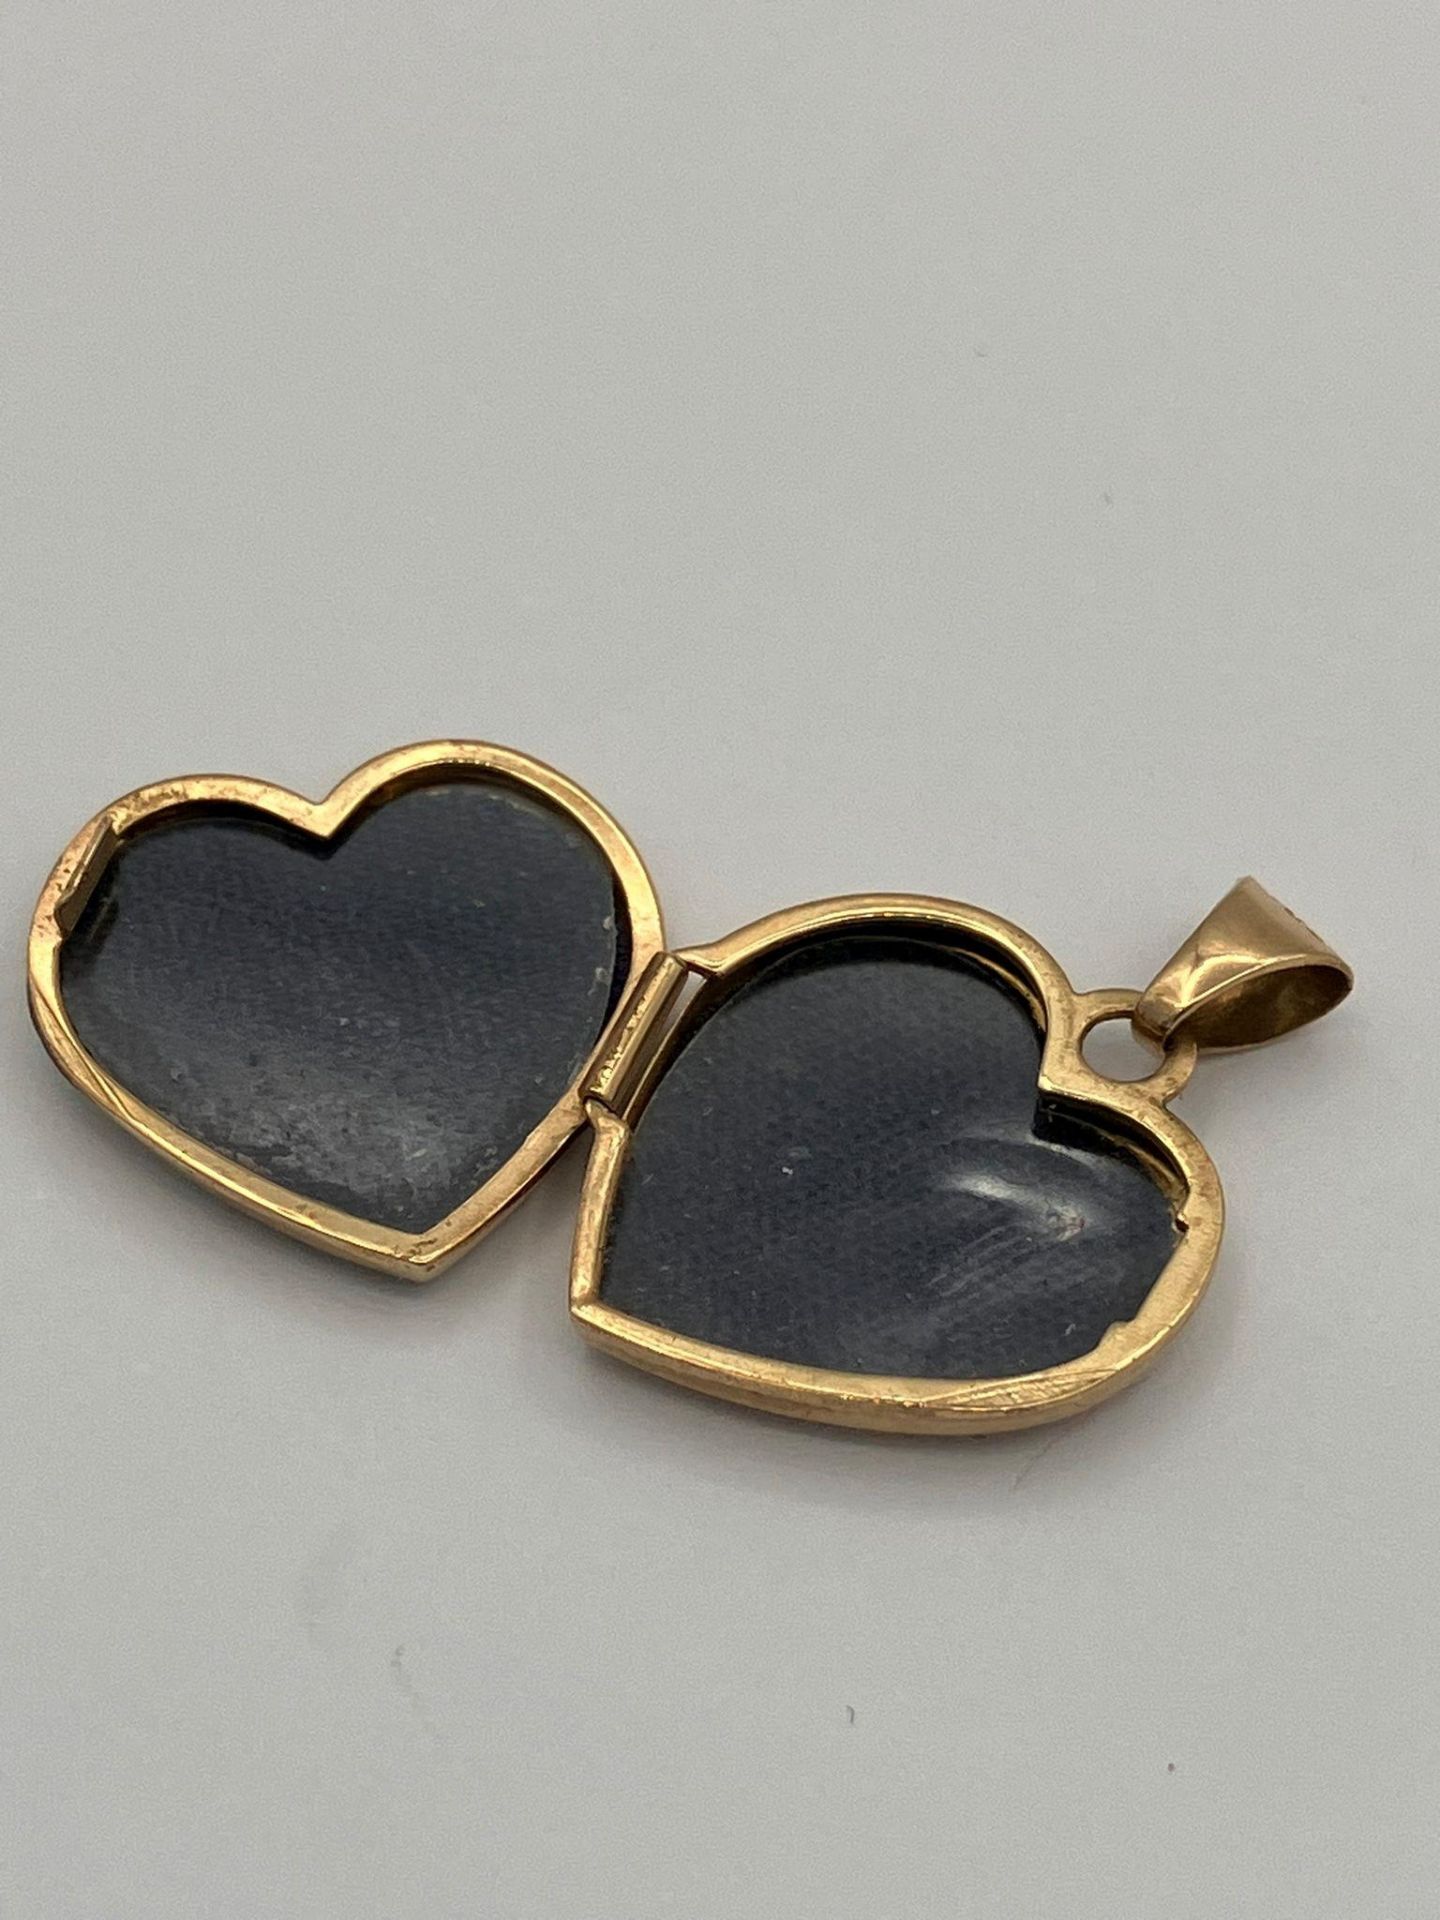 9 carat yellow GOLD, HEART LOCKET with DIAMOND DETAIL. Full UK Hallmark.1.0 grams. 2.1 cm drop. - Image 2 of 2